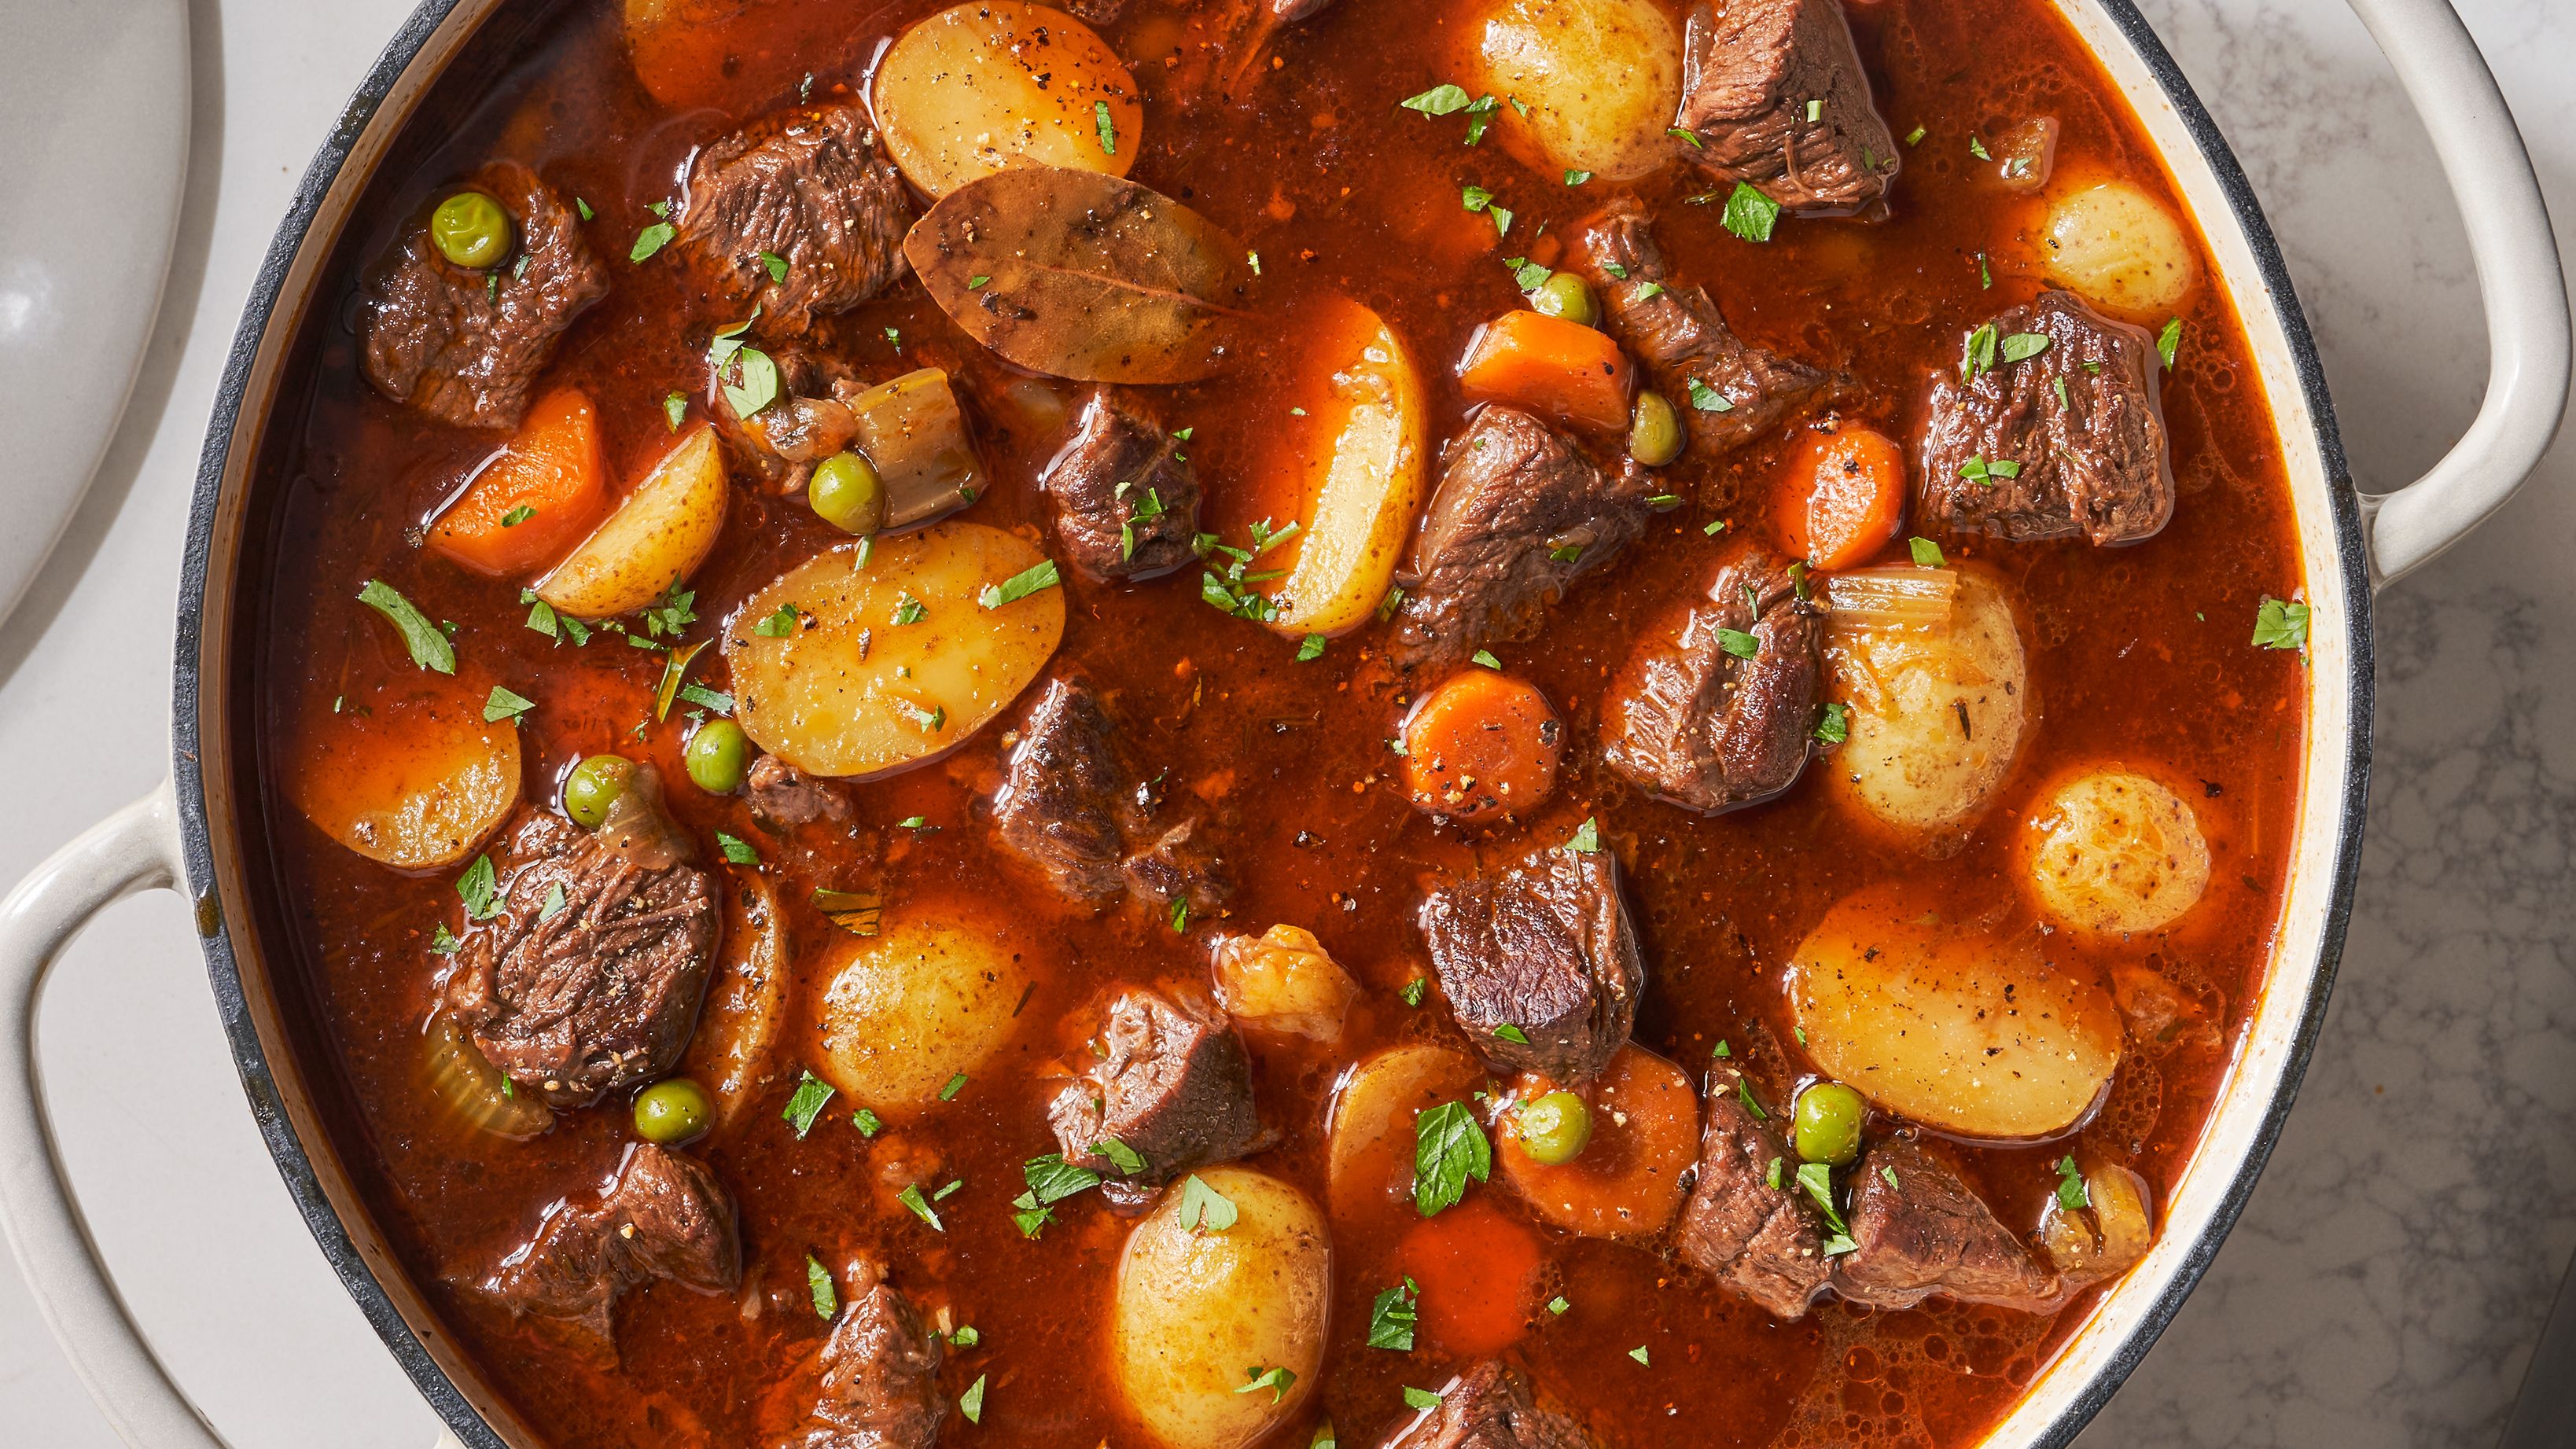 Best Beef Stew Recipe - How To Make Beef Stew